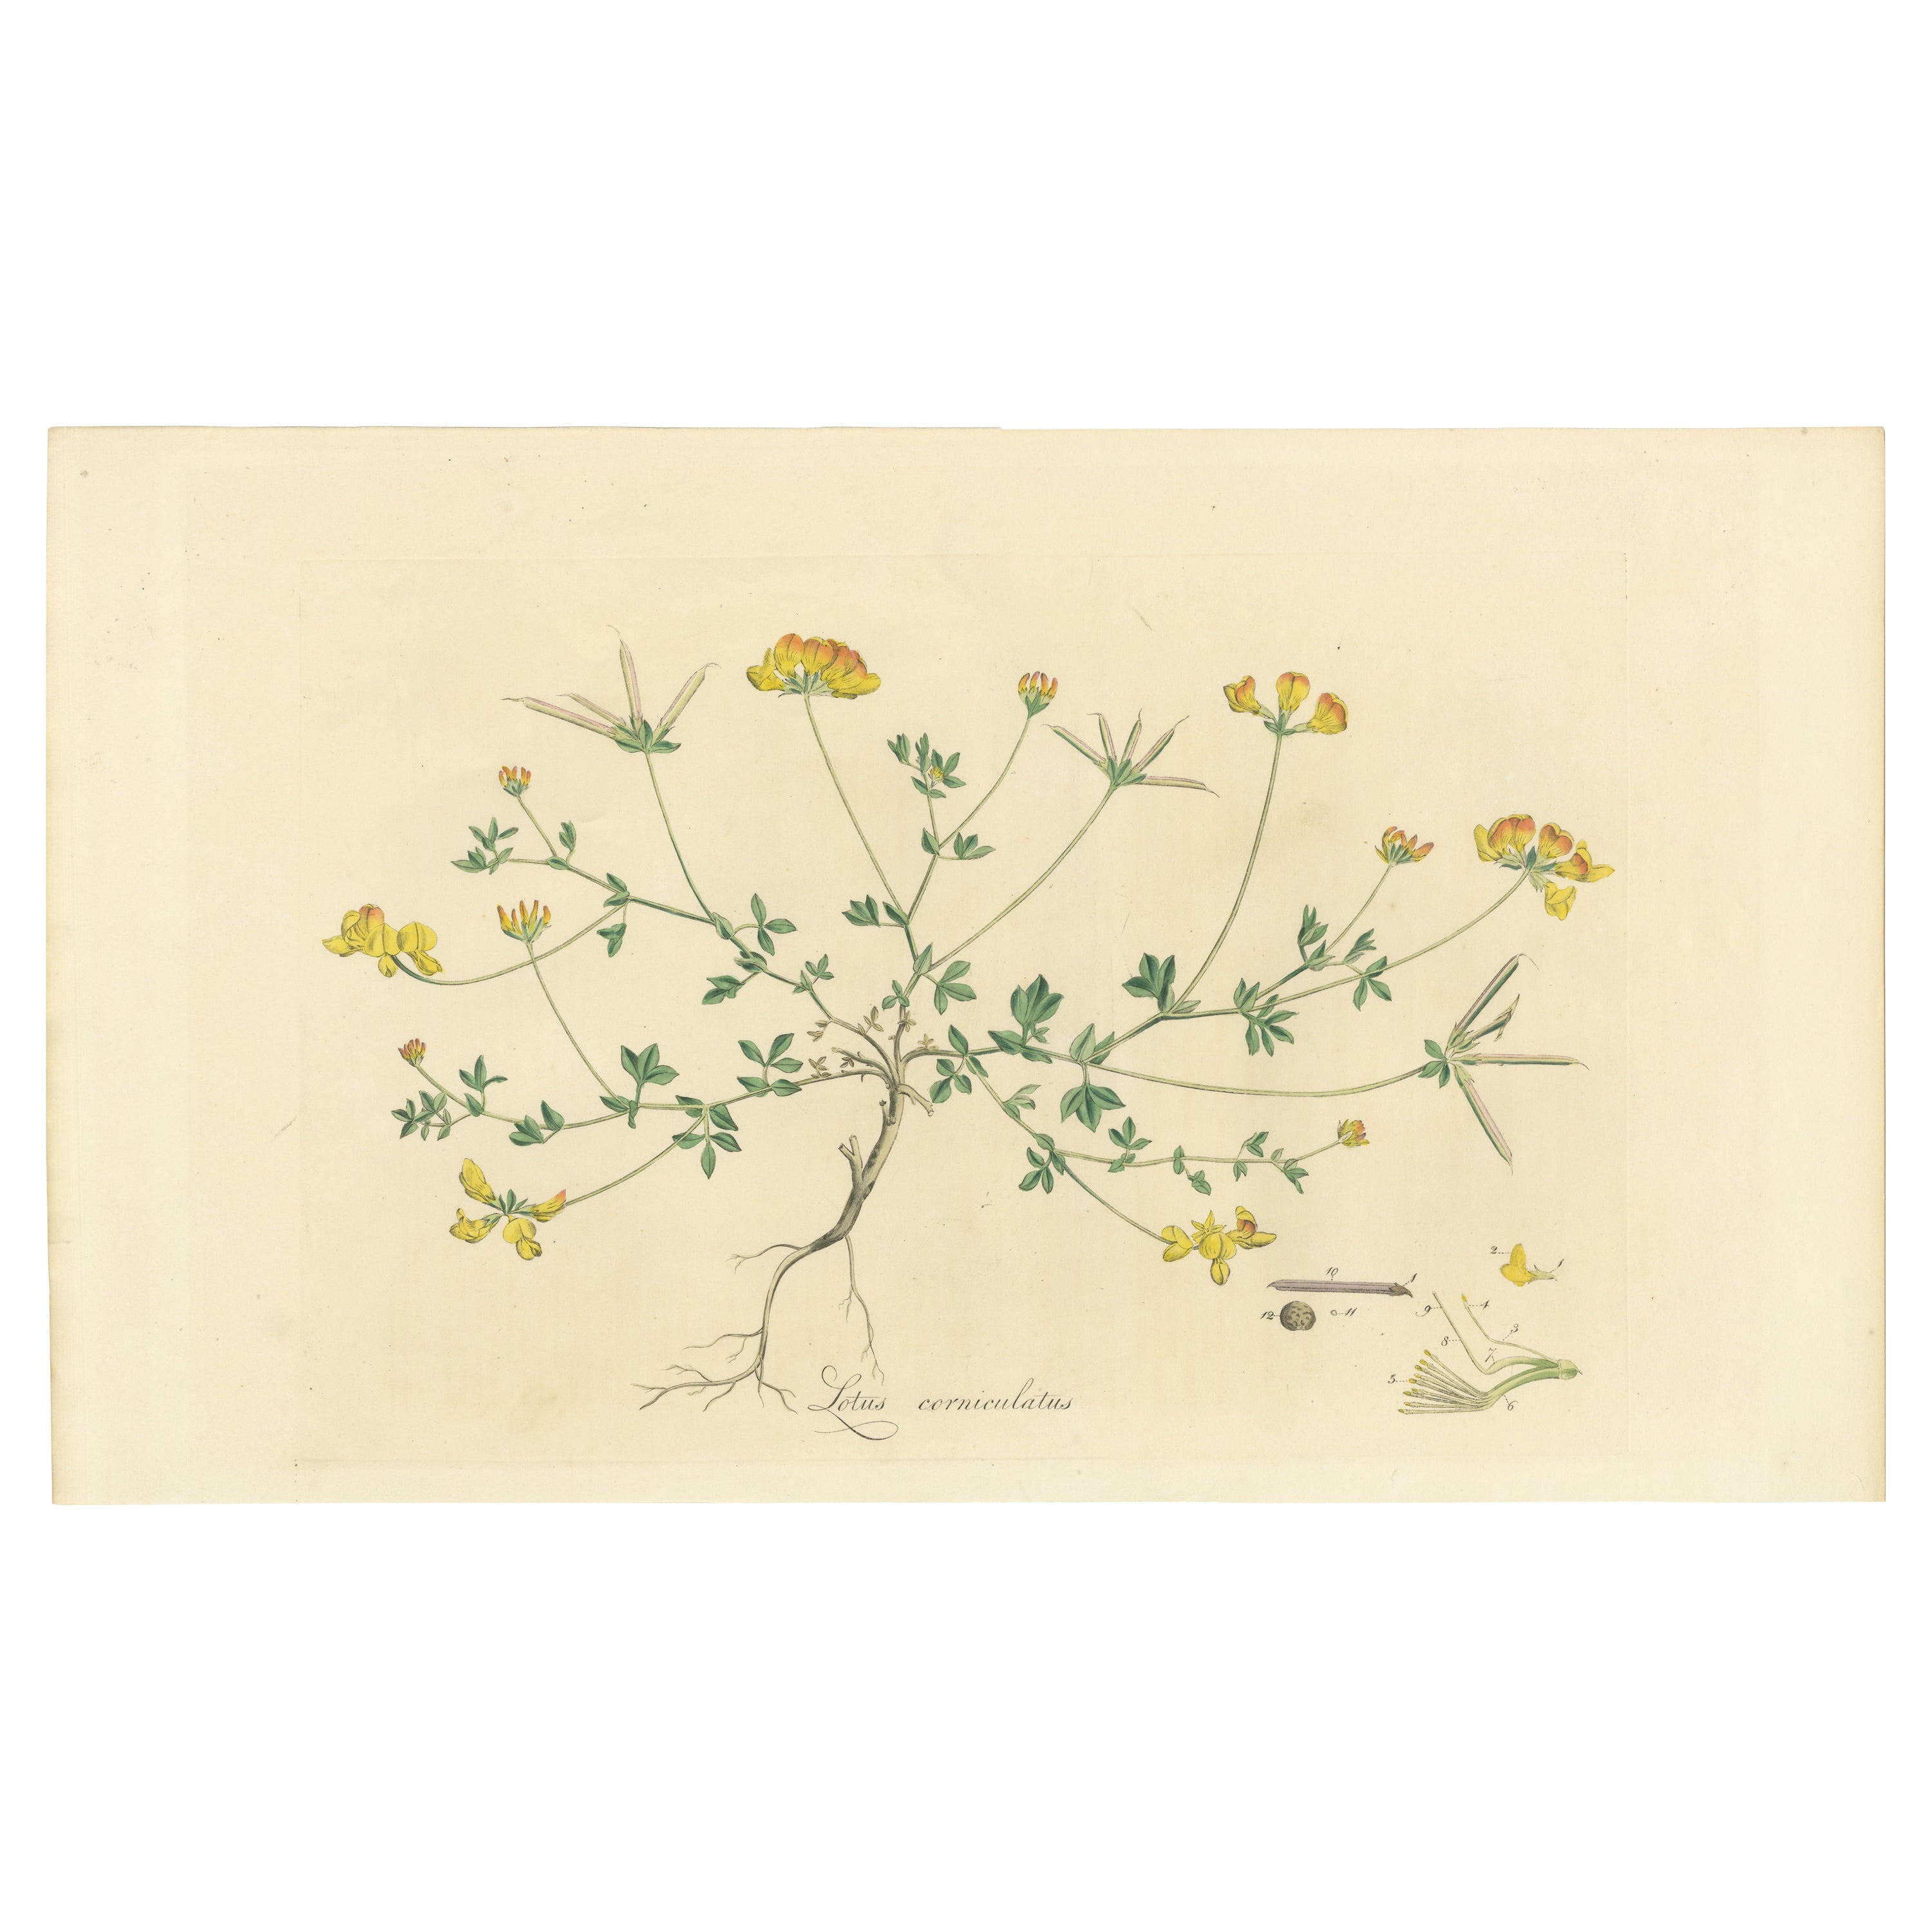 Hand-Colored Antique Print of the Lotus Corniculatus or Birds-foot Trefoil, 1777